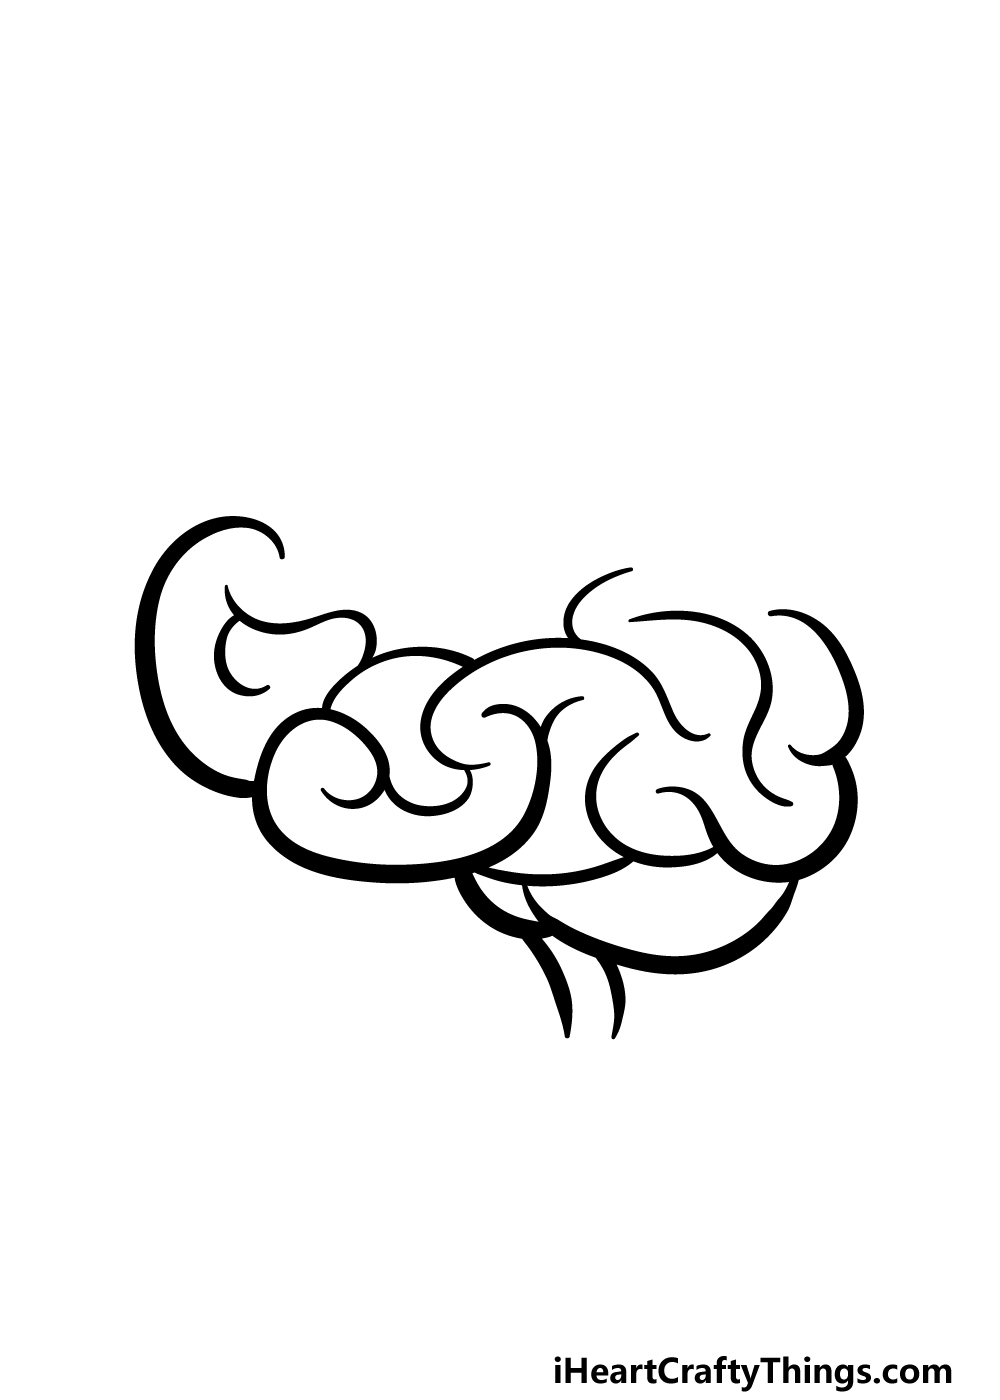 how to draw a cartoon brain step 3